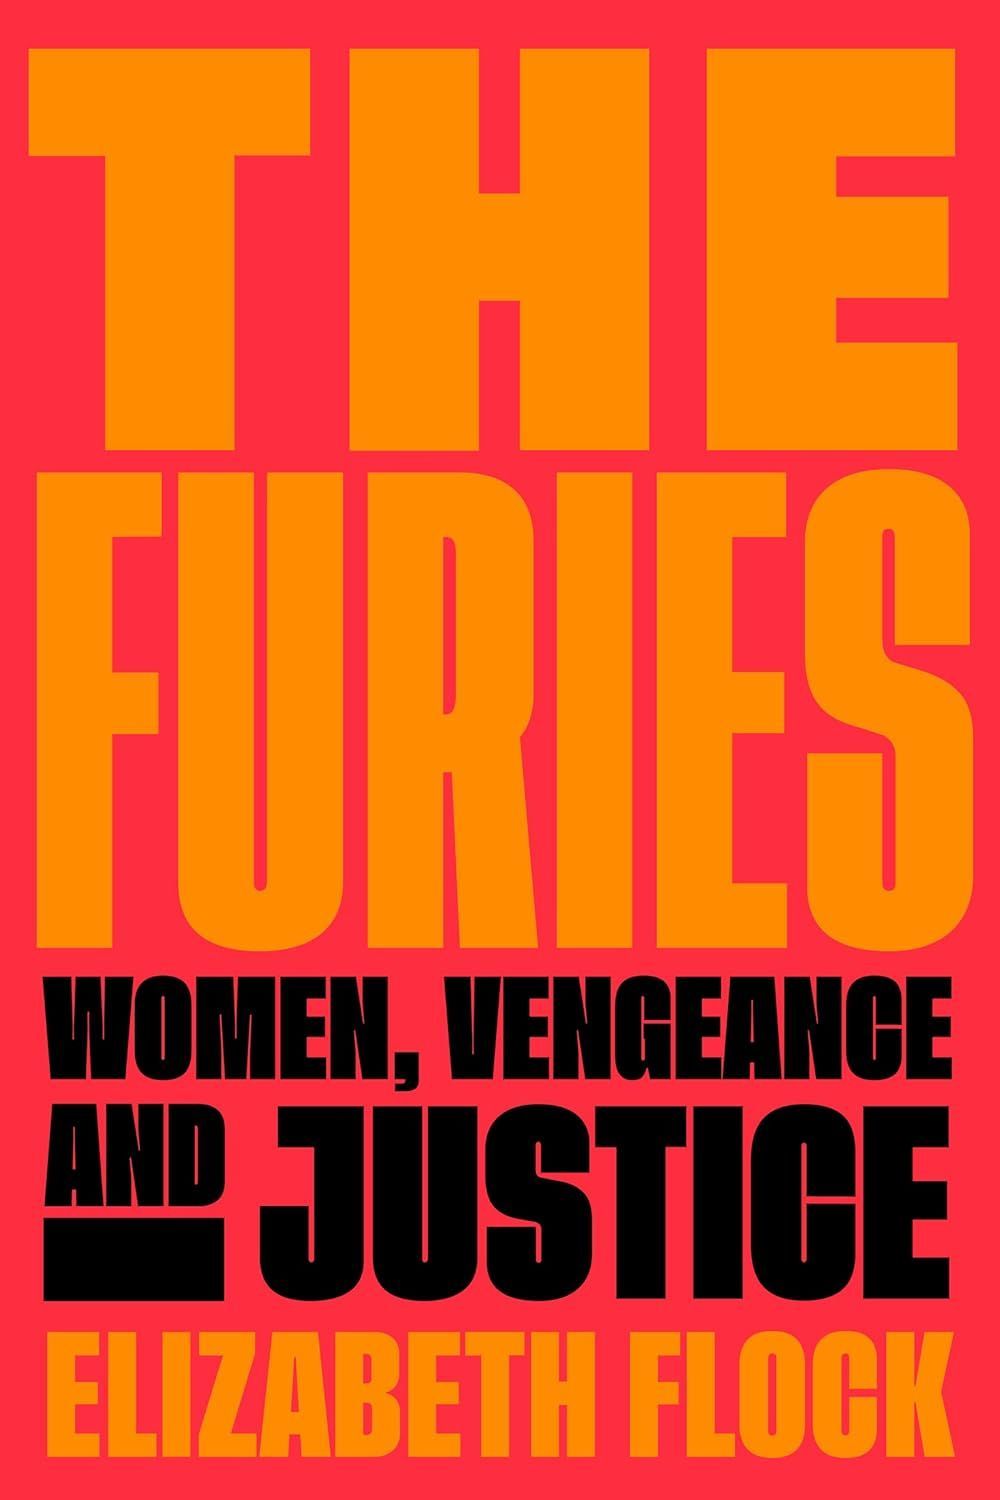 Complex Feminist Fantasias: On Elizabeth Flock’s “The Furies”